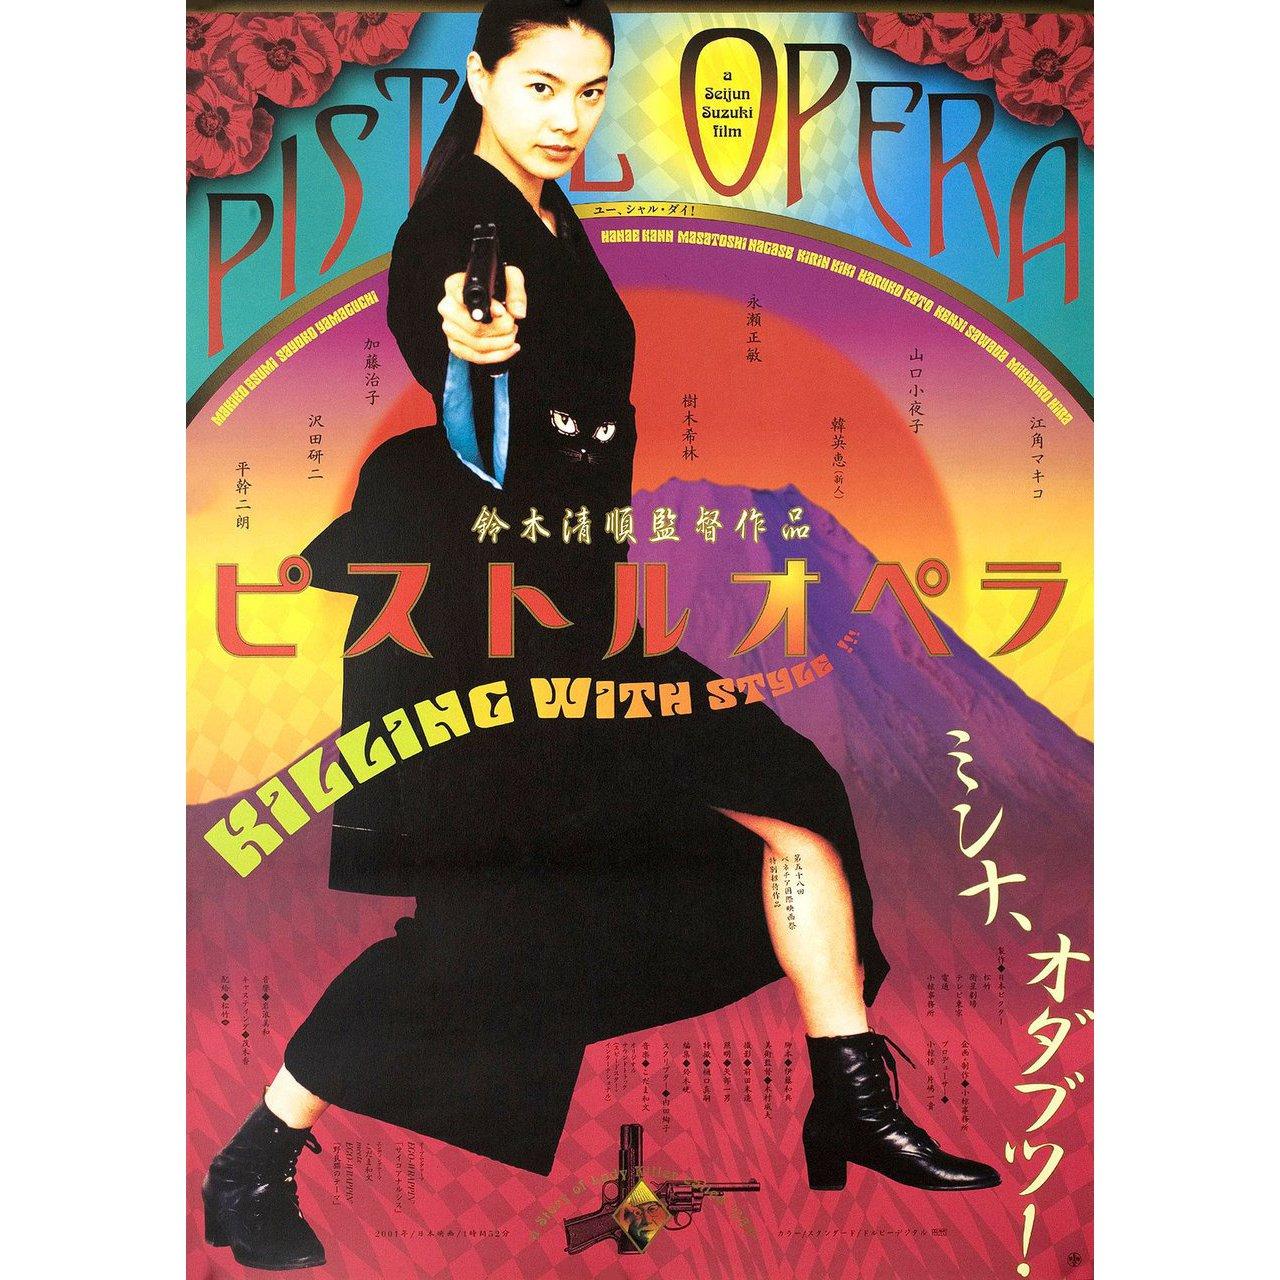 Original 2001 Japanese B5 chirashi flyer for the film “Pistol Opera” (Pisutoru opera) directed by Seijun Suzuki with Makiko Esumi / Sayoko Yamaguchi / Hanae Kan / Masatoshi Nagase. Fine condition, rolled. Please note: the size is stated in inches